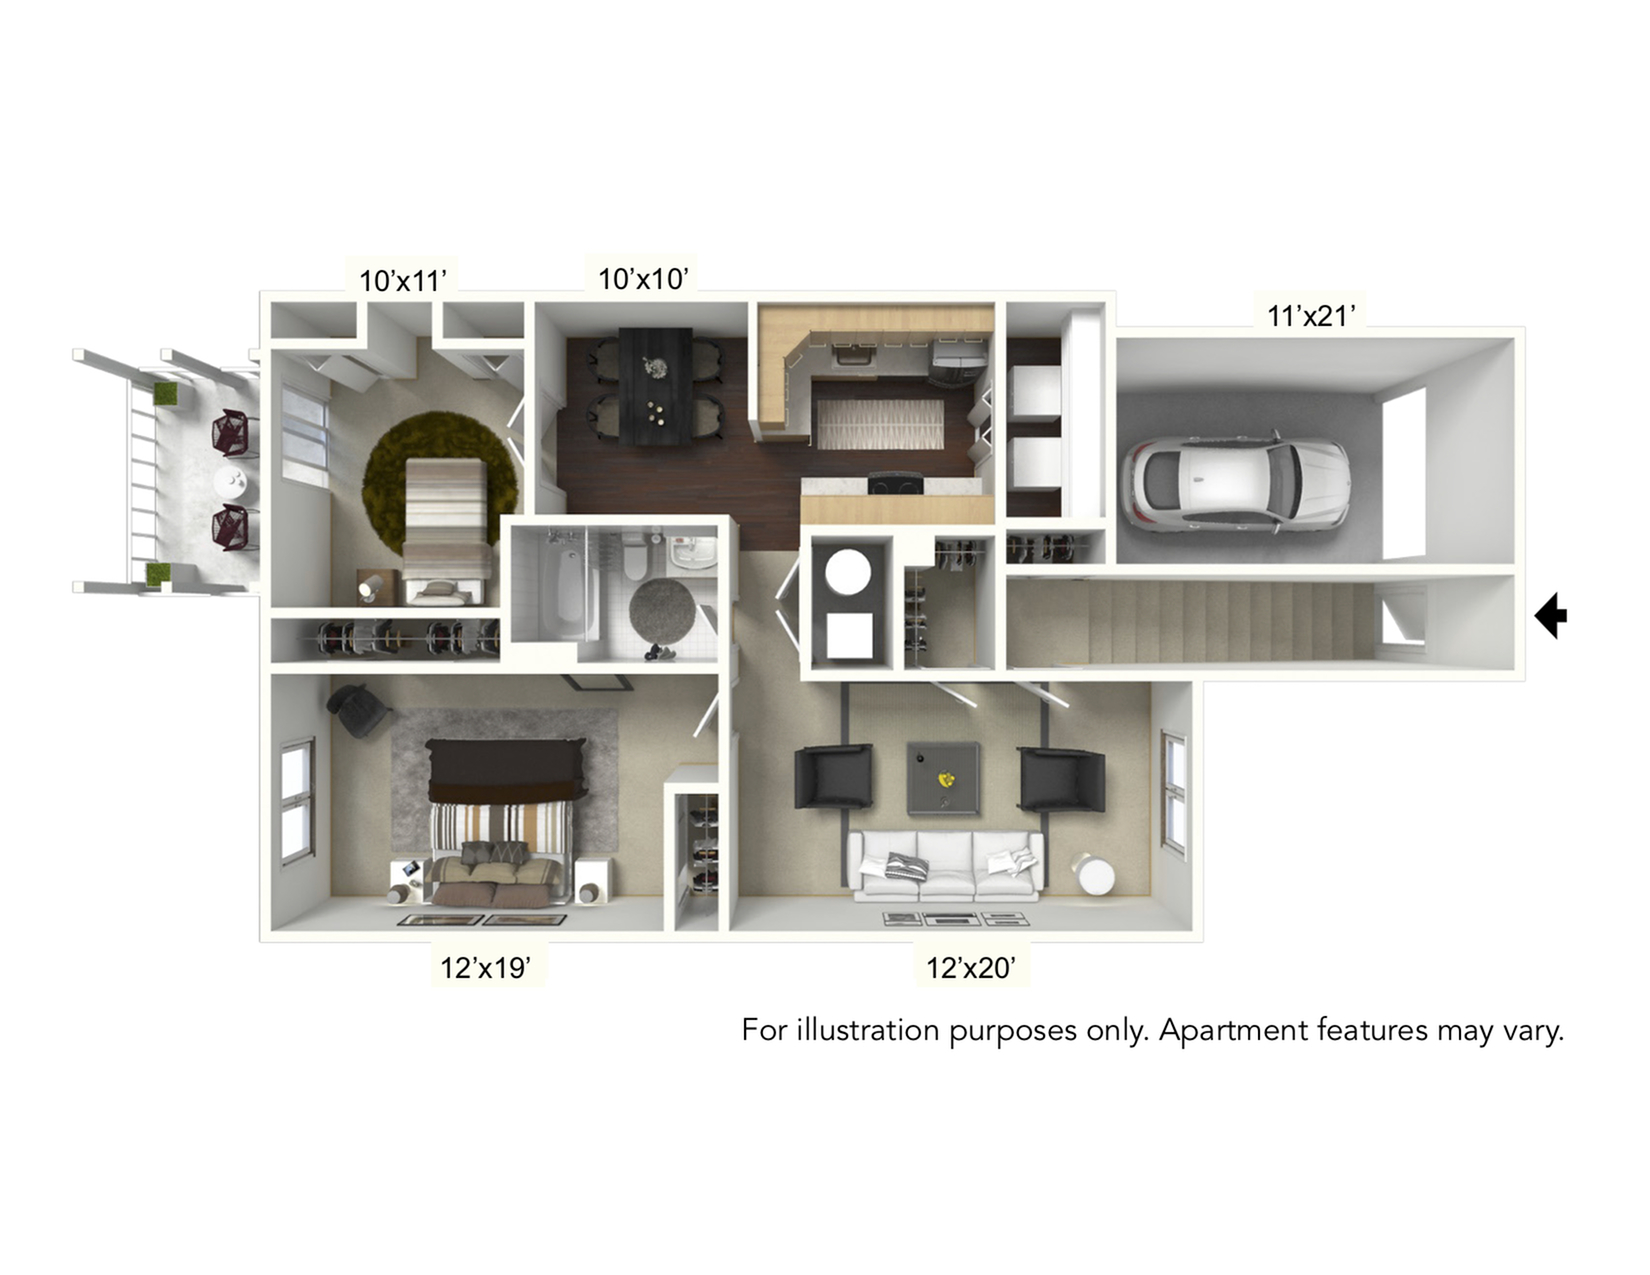 2 Bedroom Apartments Stonegate, Garage Apartment Floor Plans 2 Bedrooms